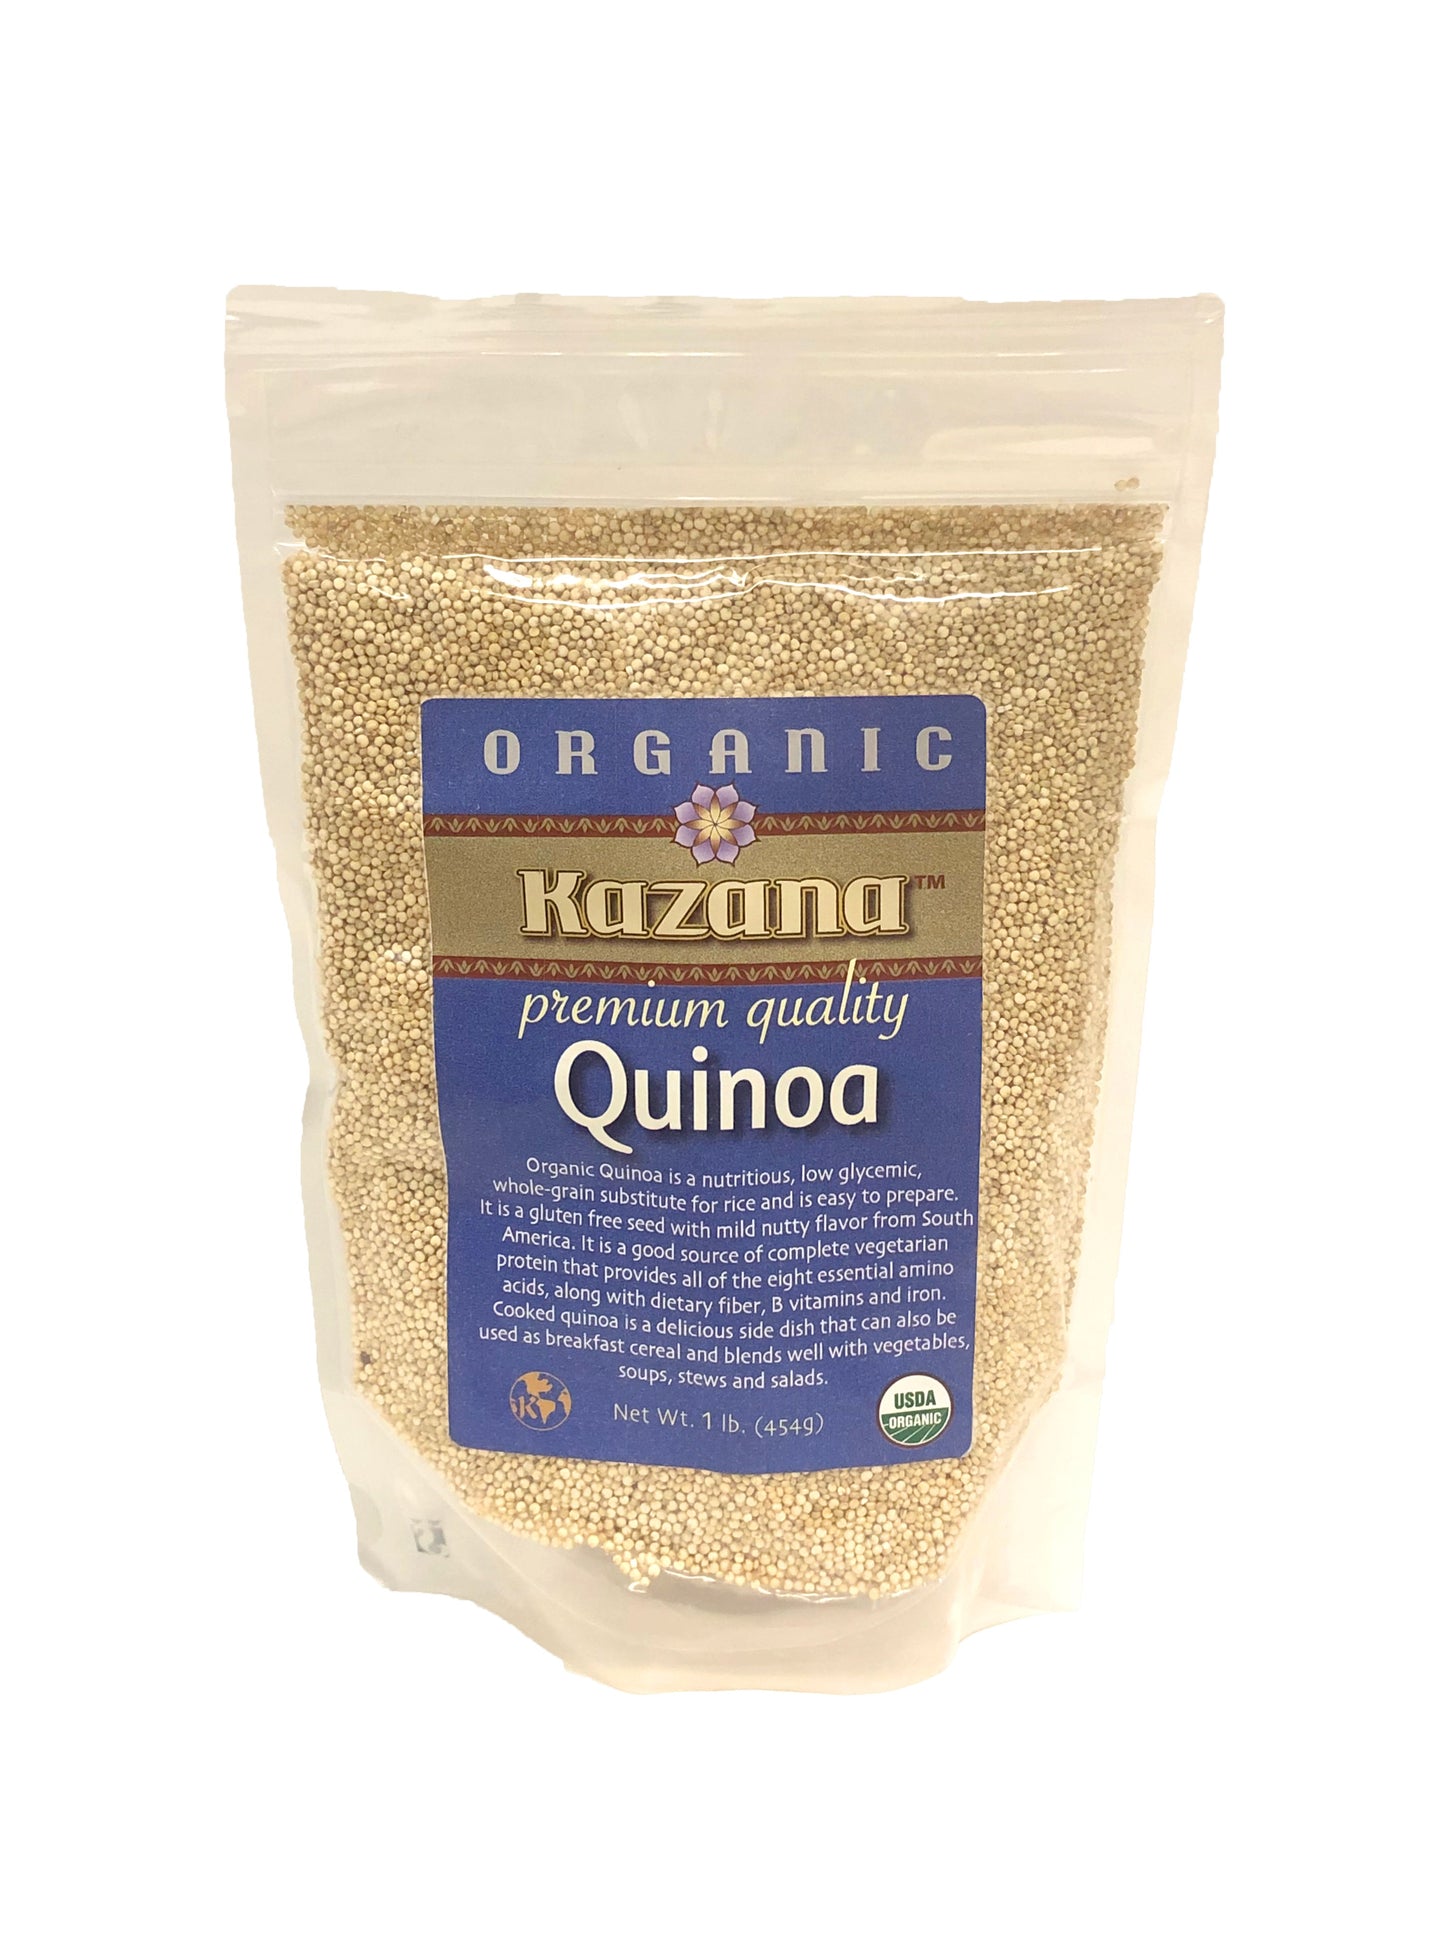 Wholesale Quinoa, Organic 16oz (453g)